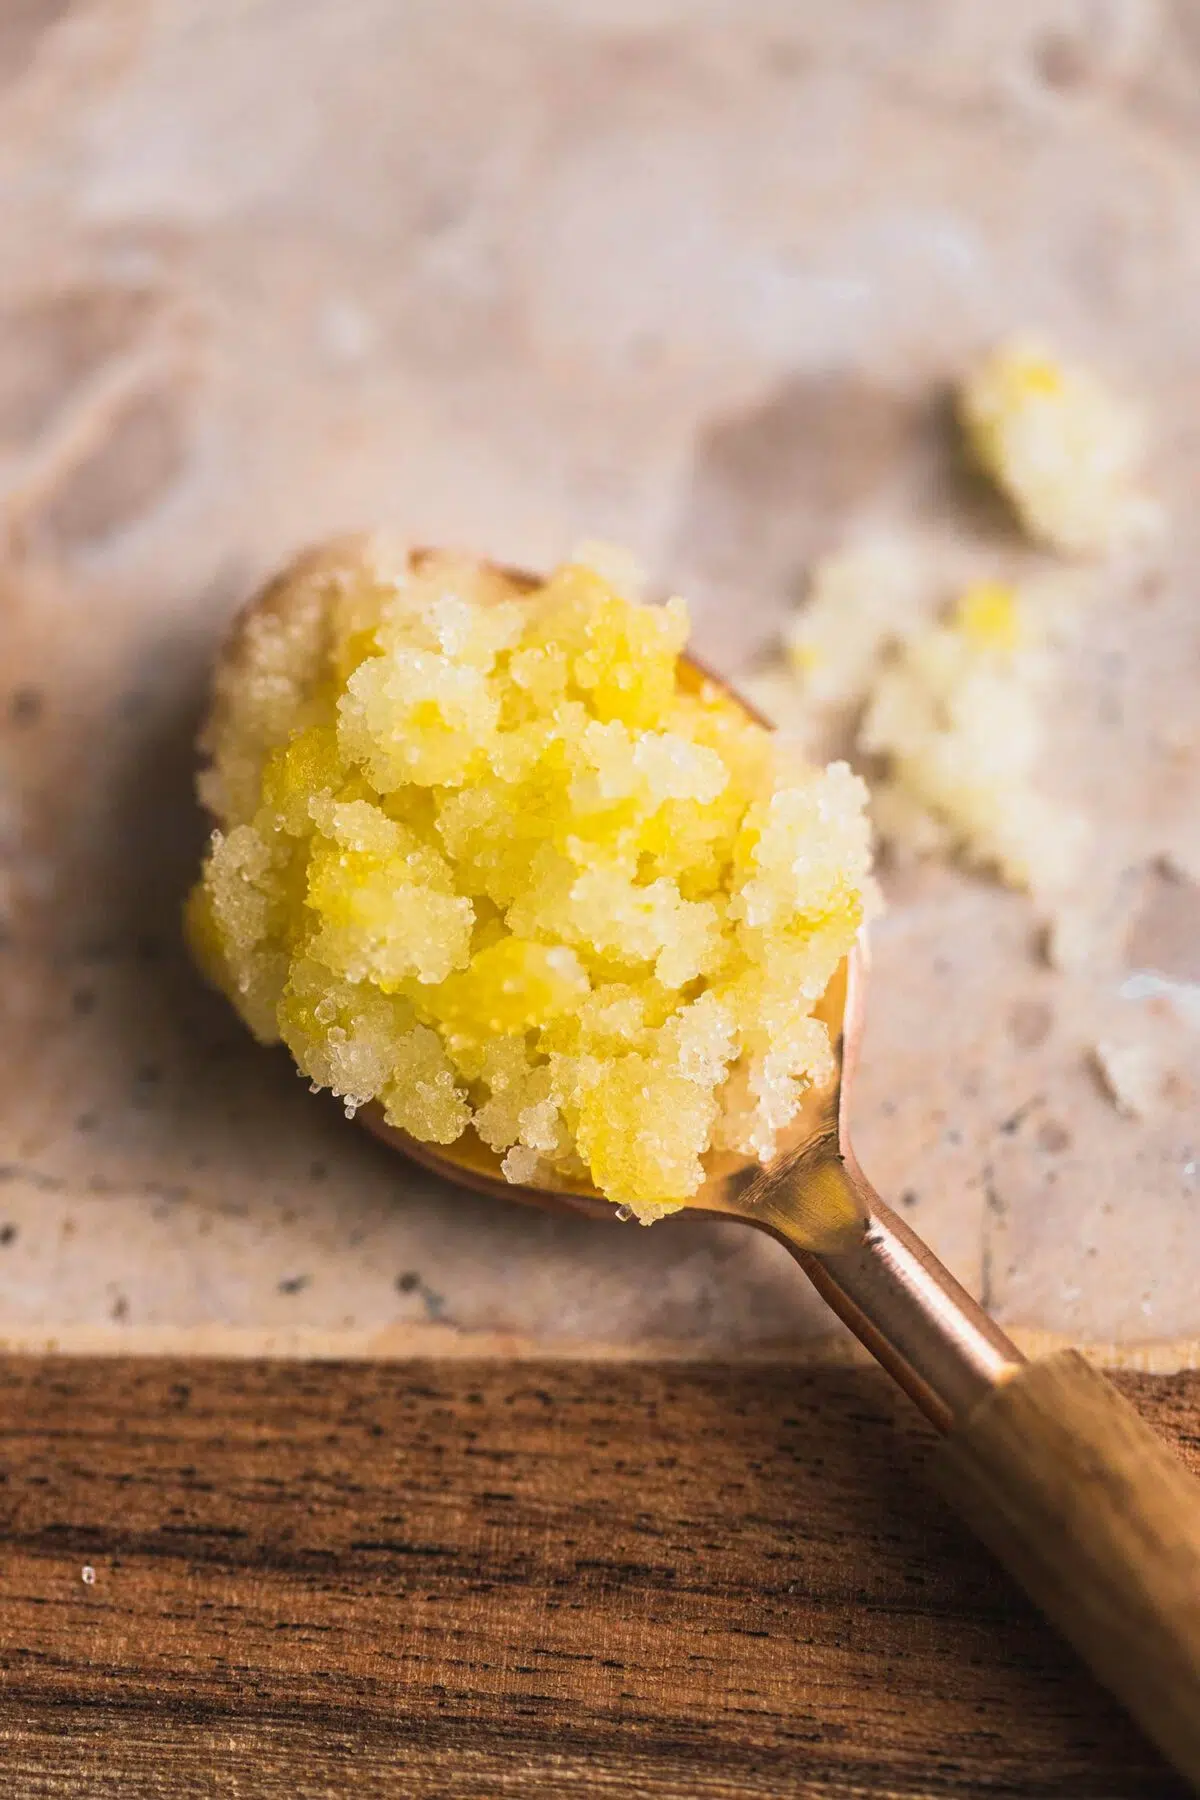 how to make lemon sugar